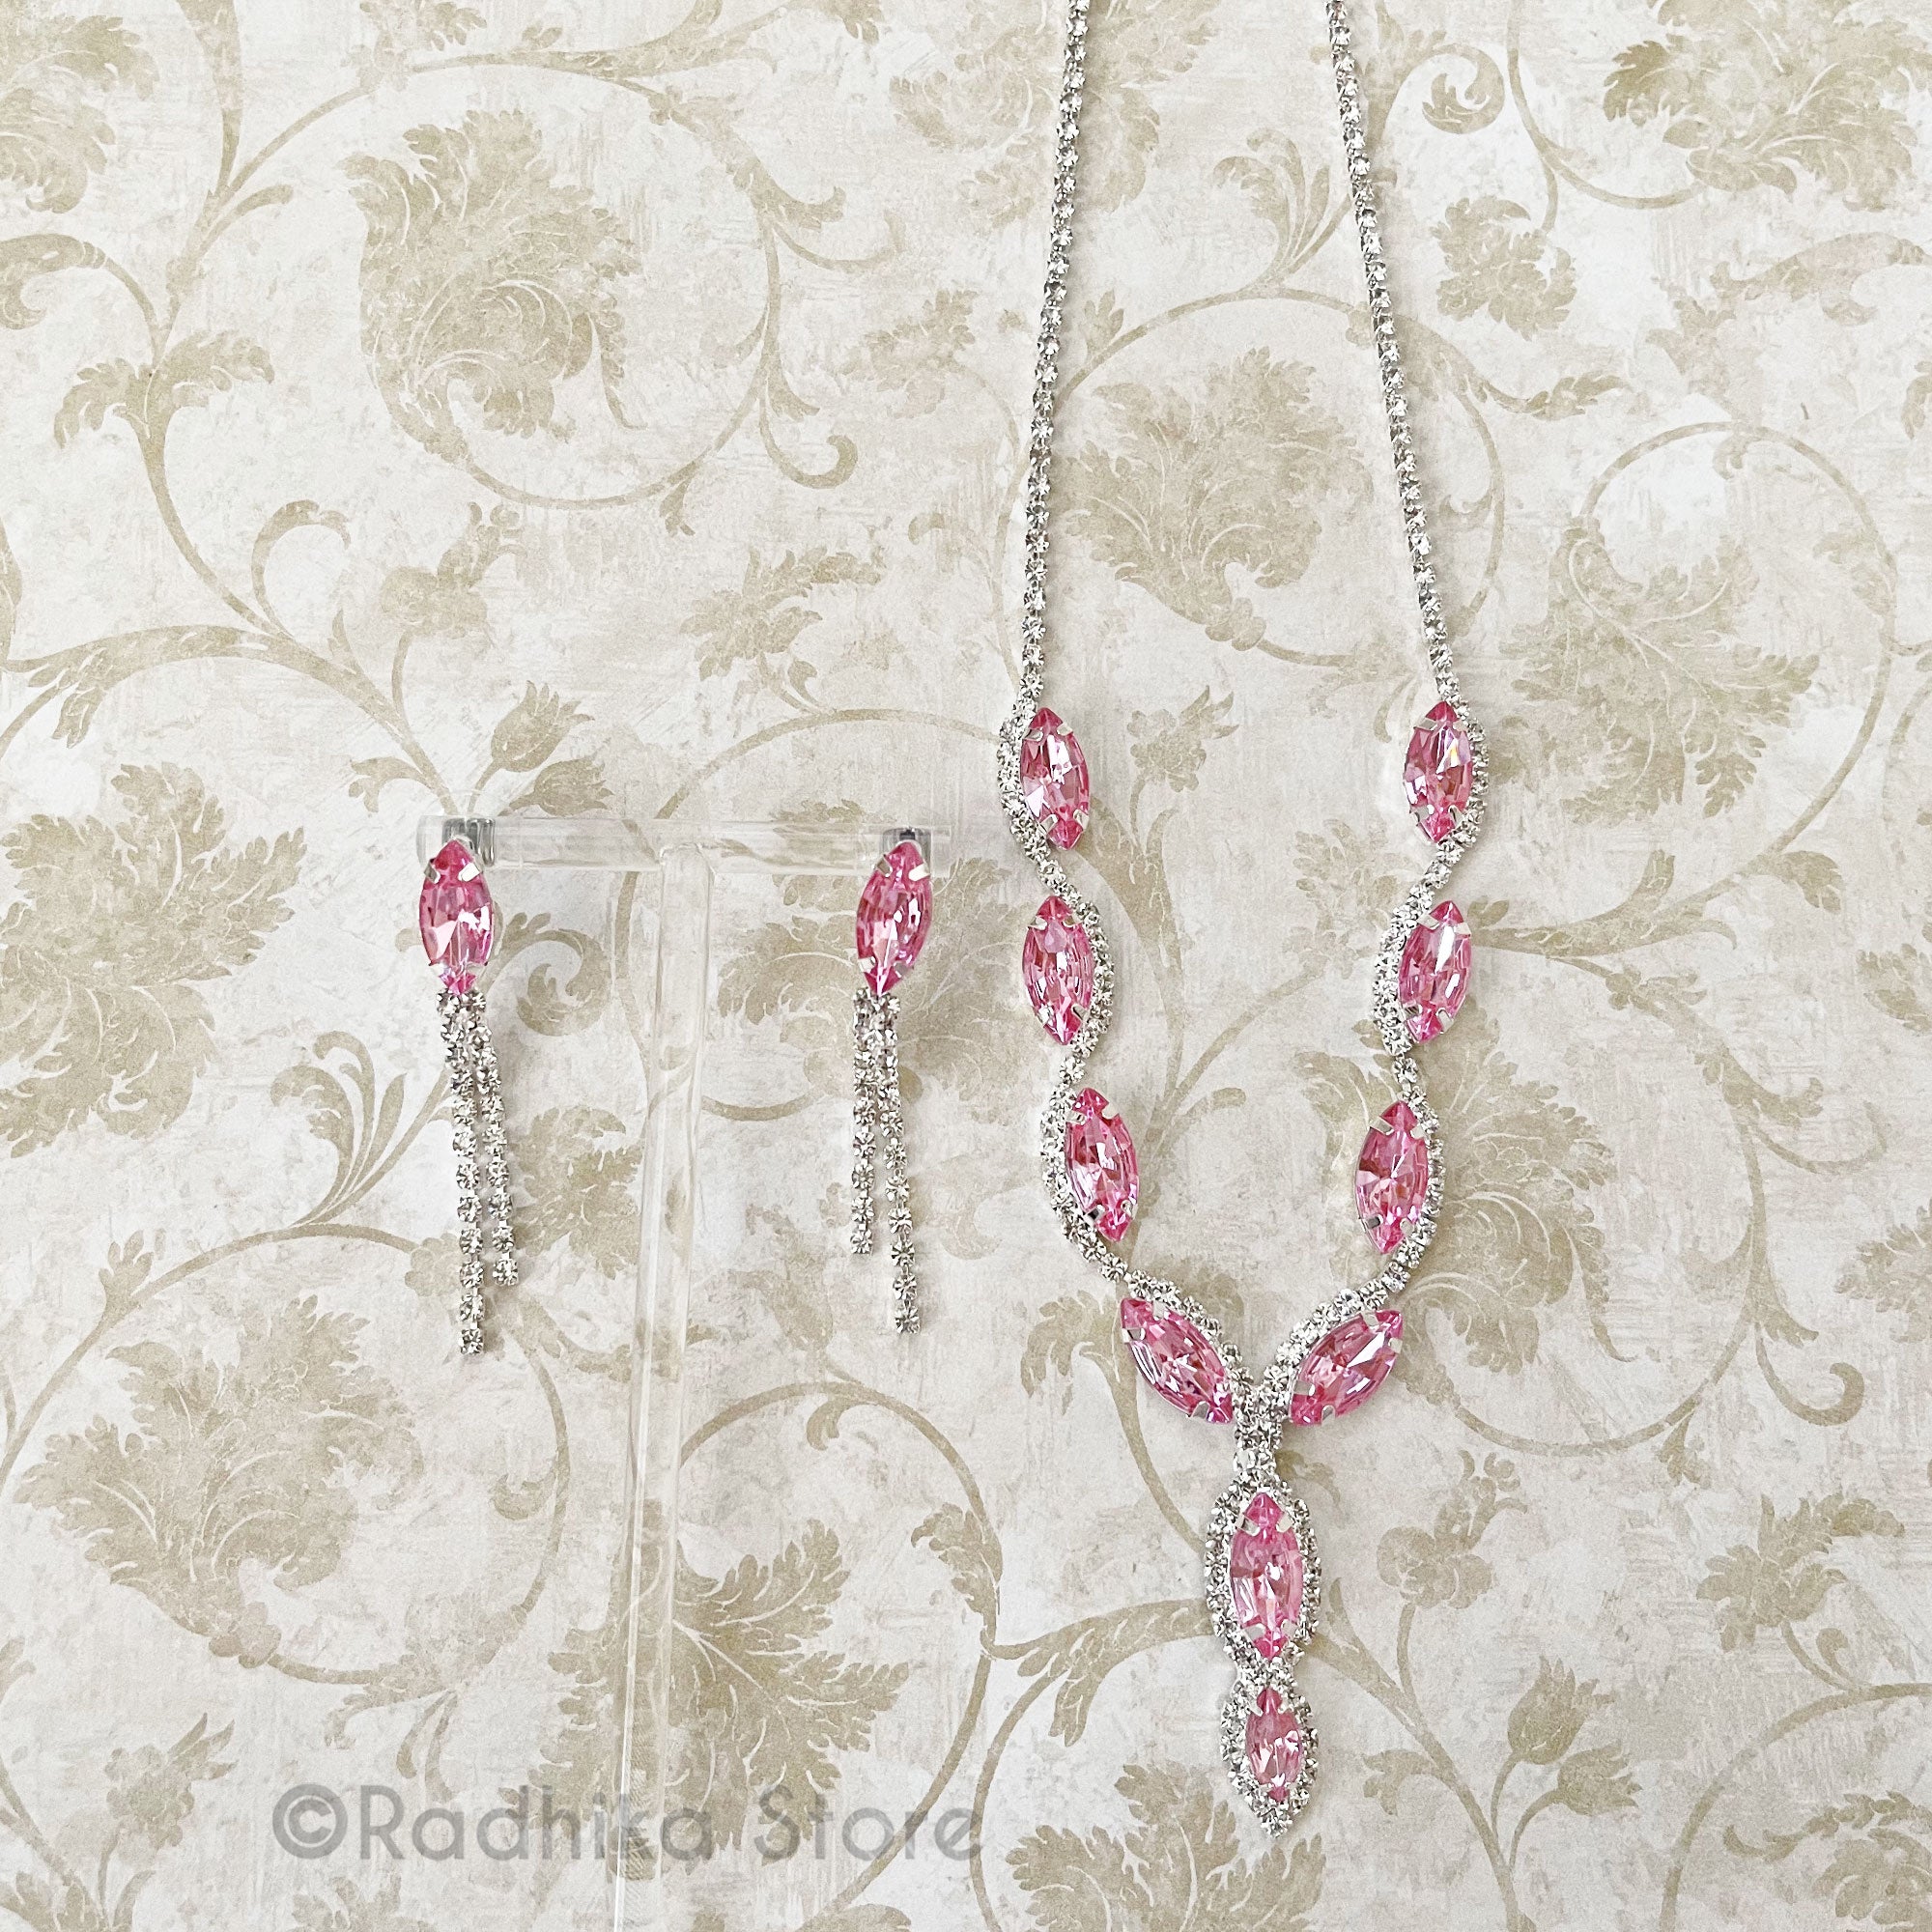 Scalloped Pink Diamond Marquise - Rhinestone Deity Necklace - And Earring Set